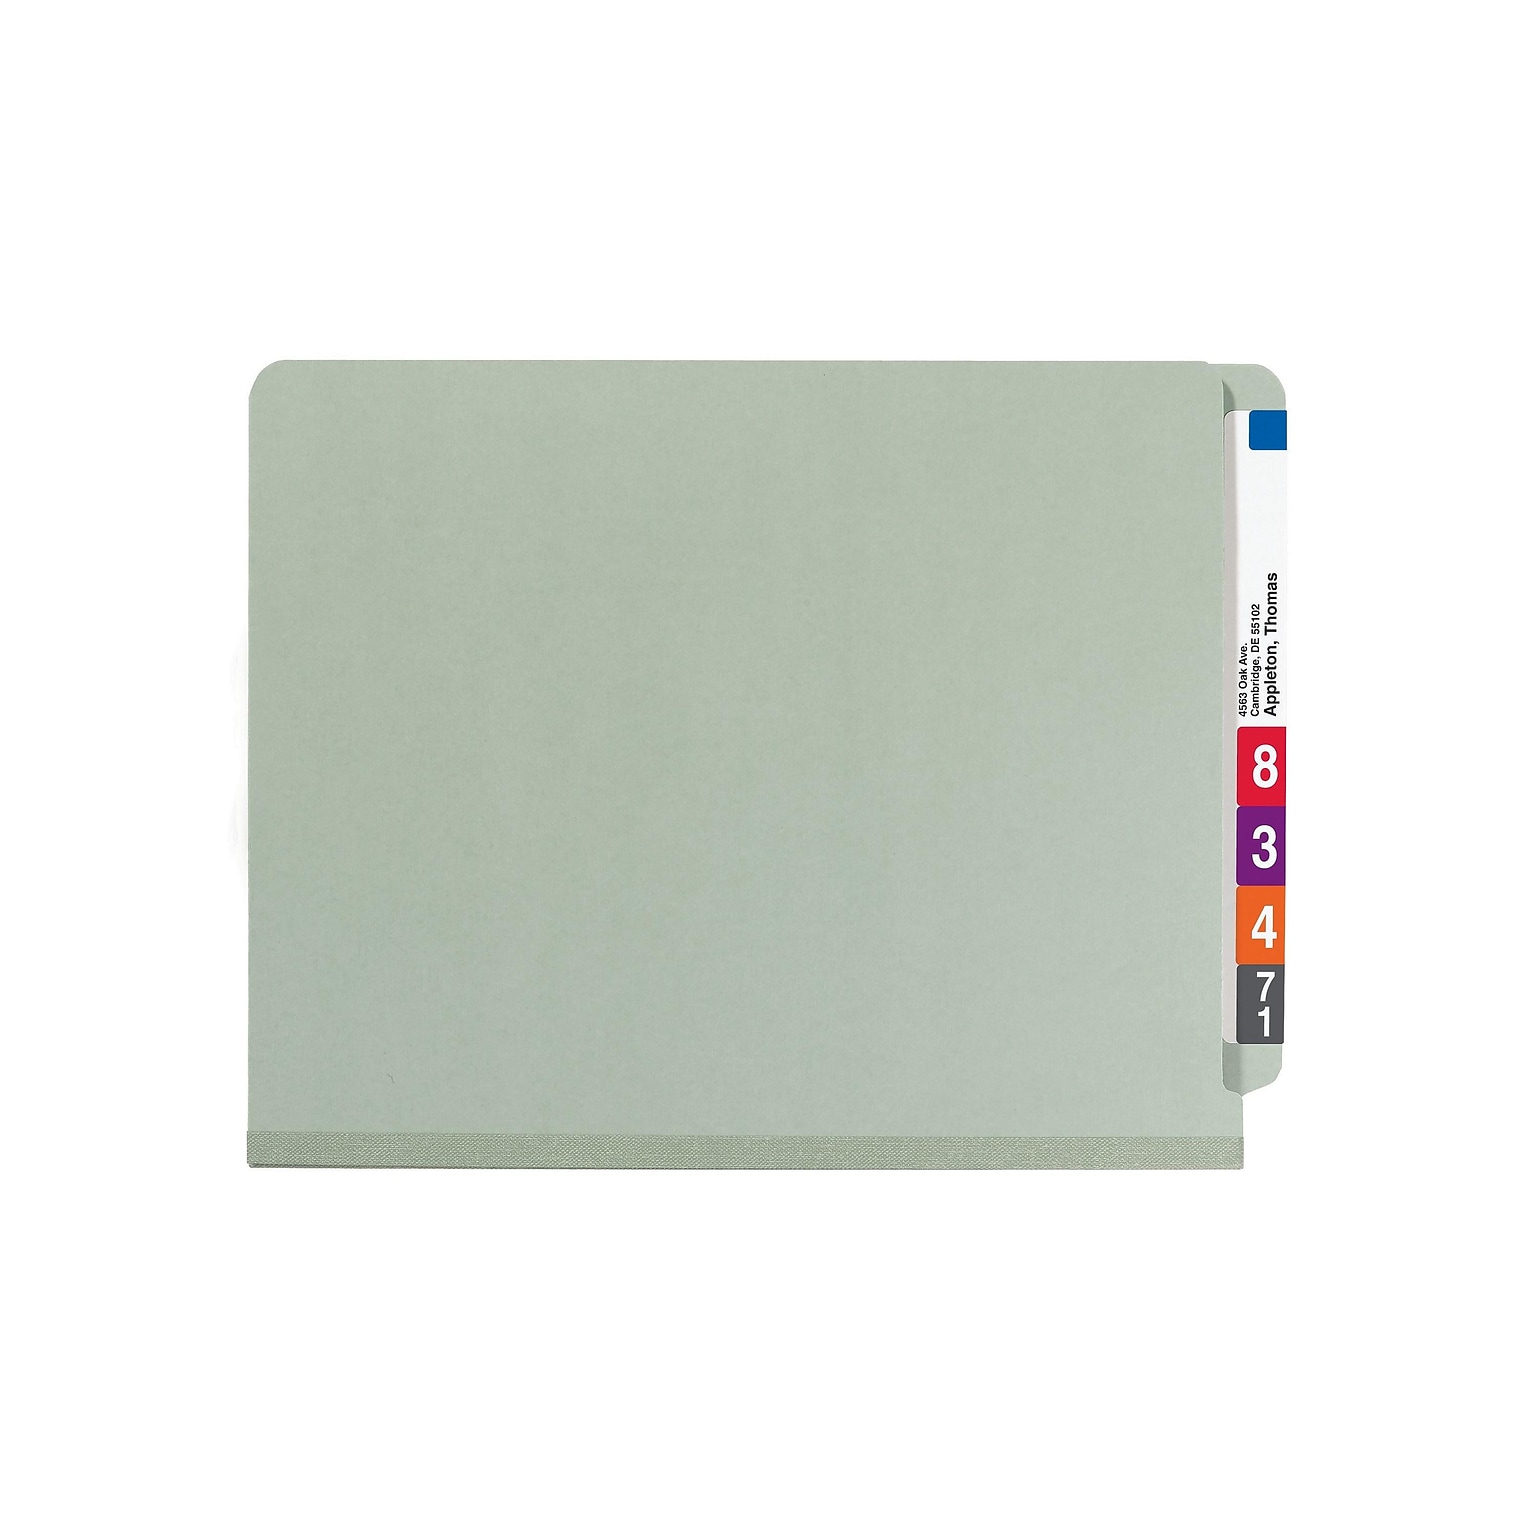 Smead End Tab Pressboard Classification Folders with SafeSHIELD Fasteners, Letter Size, Gray/Green, 10/Box (26800)